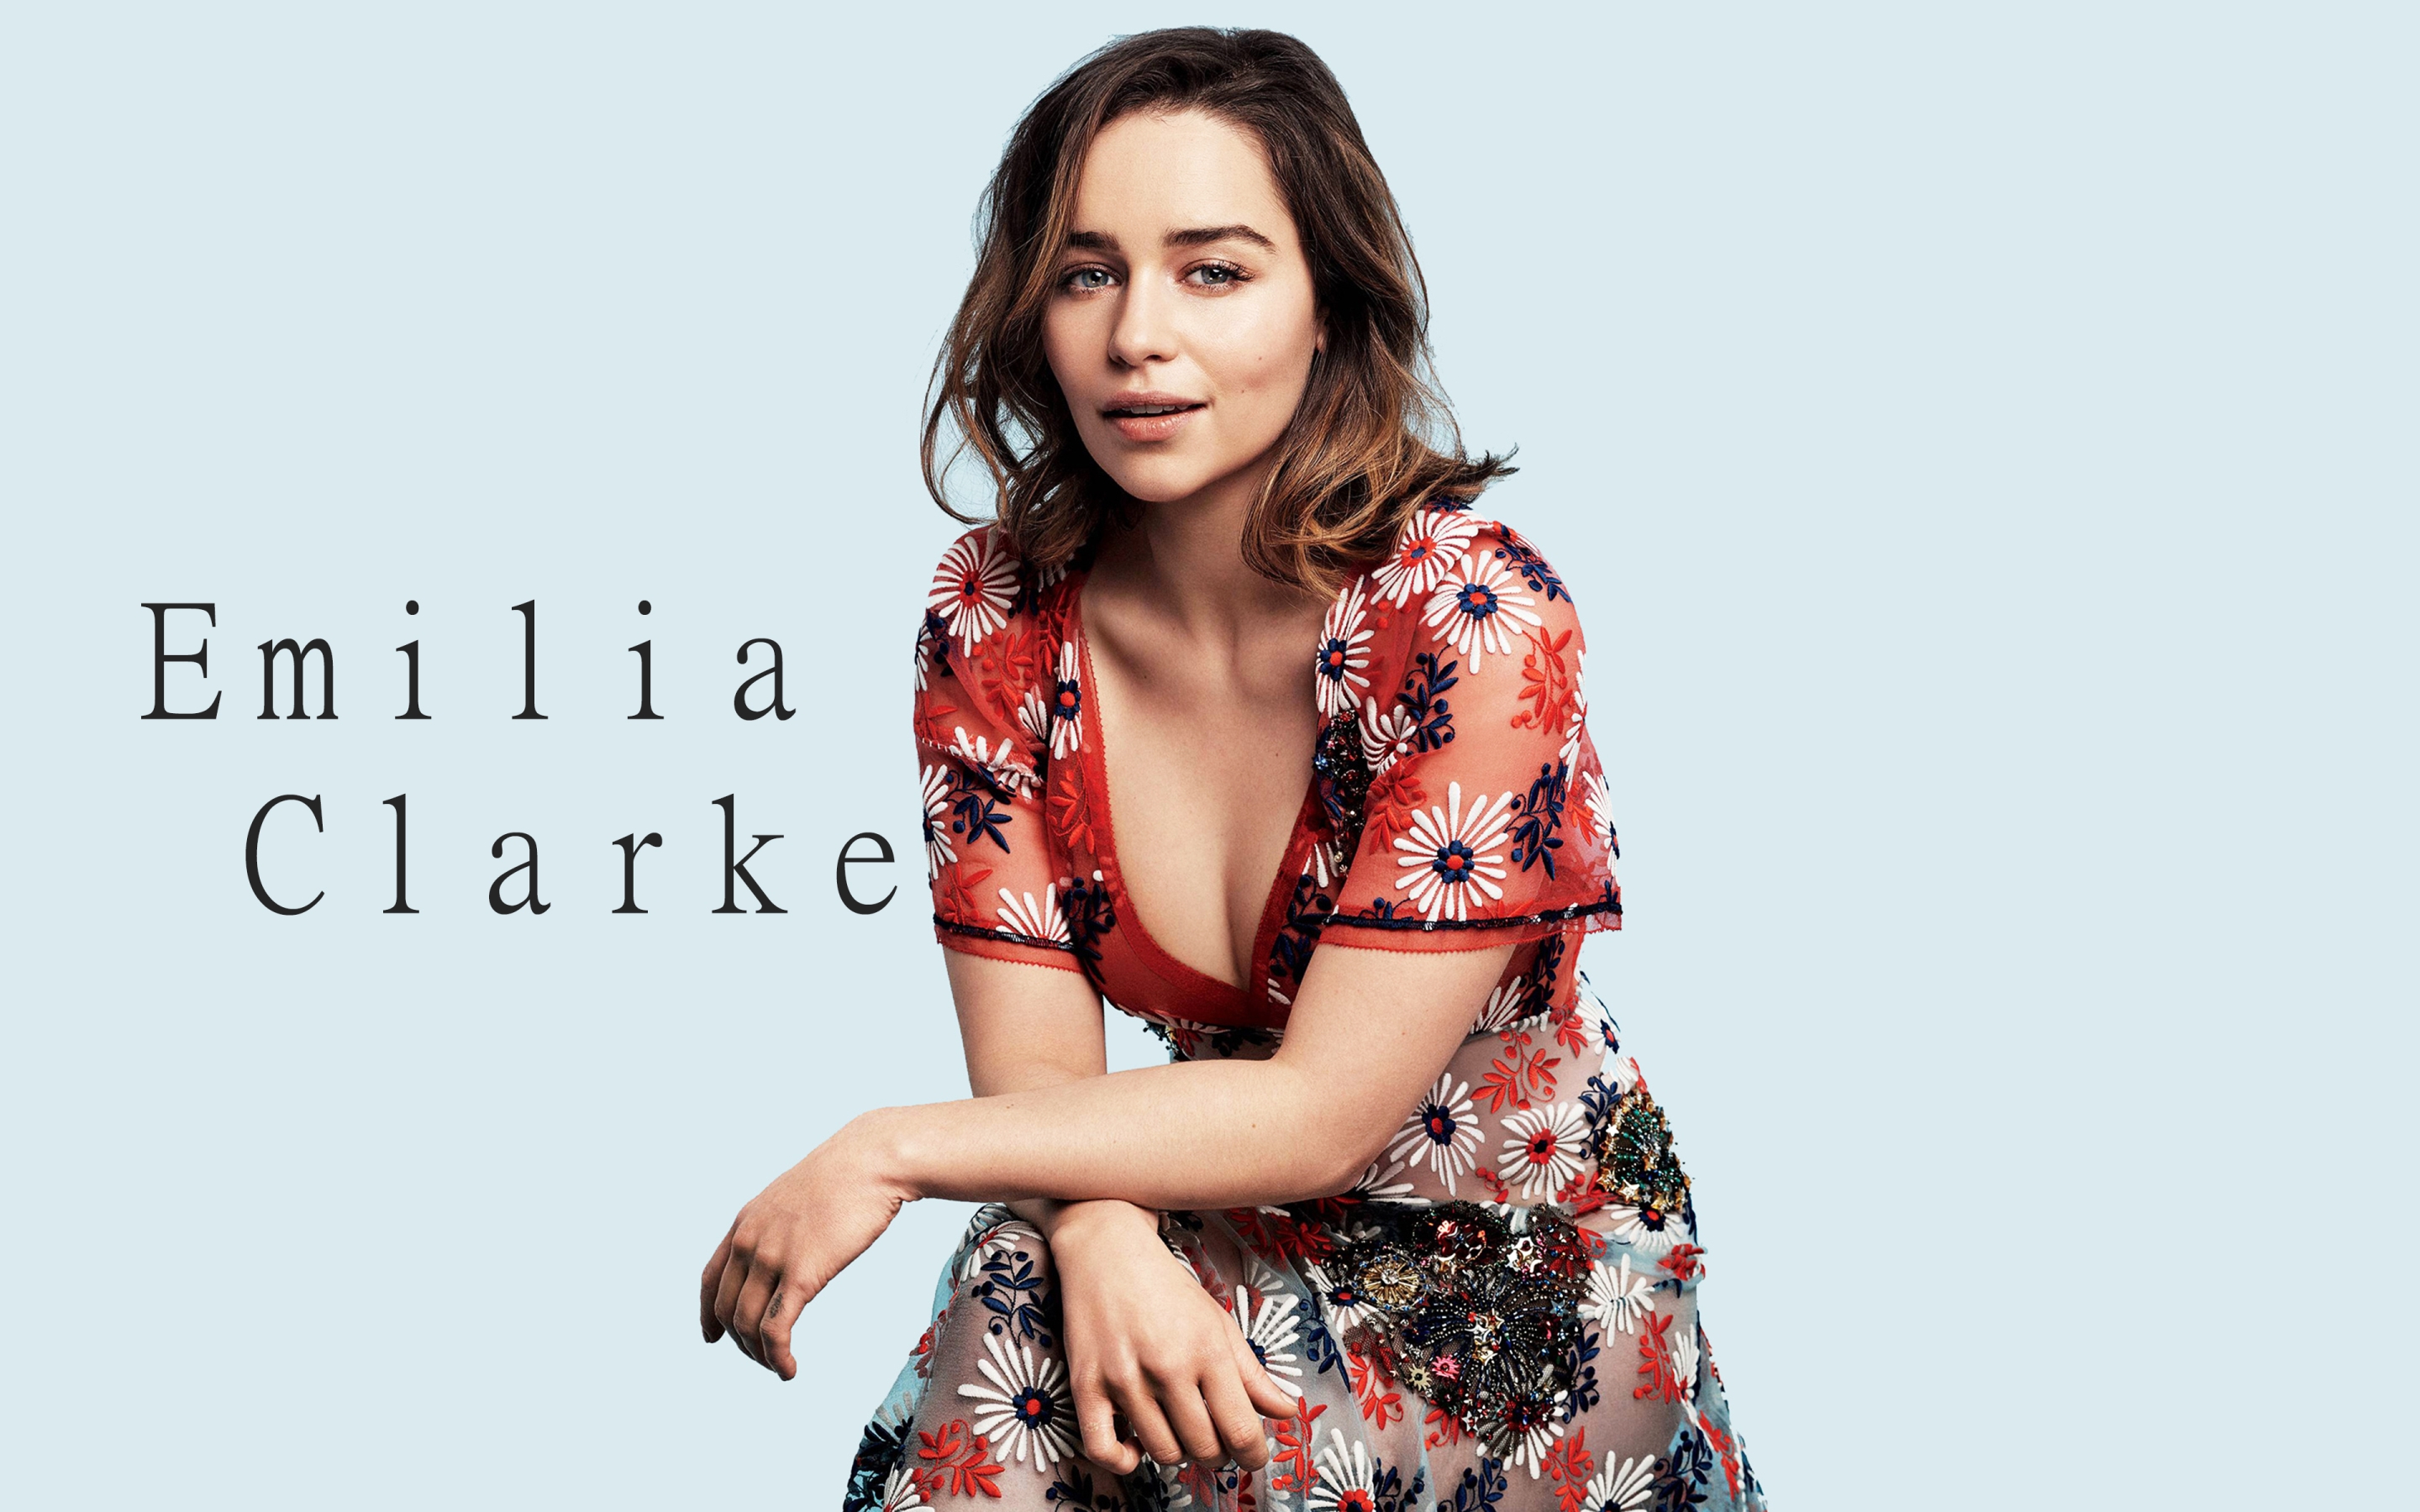 Emilia Clarke 2017 for 2880 x 1800 Retina Display resolution